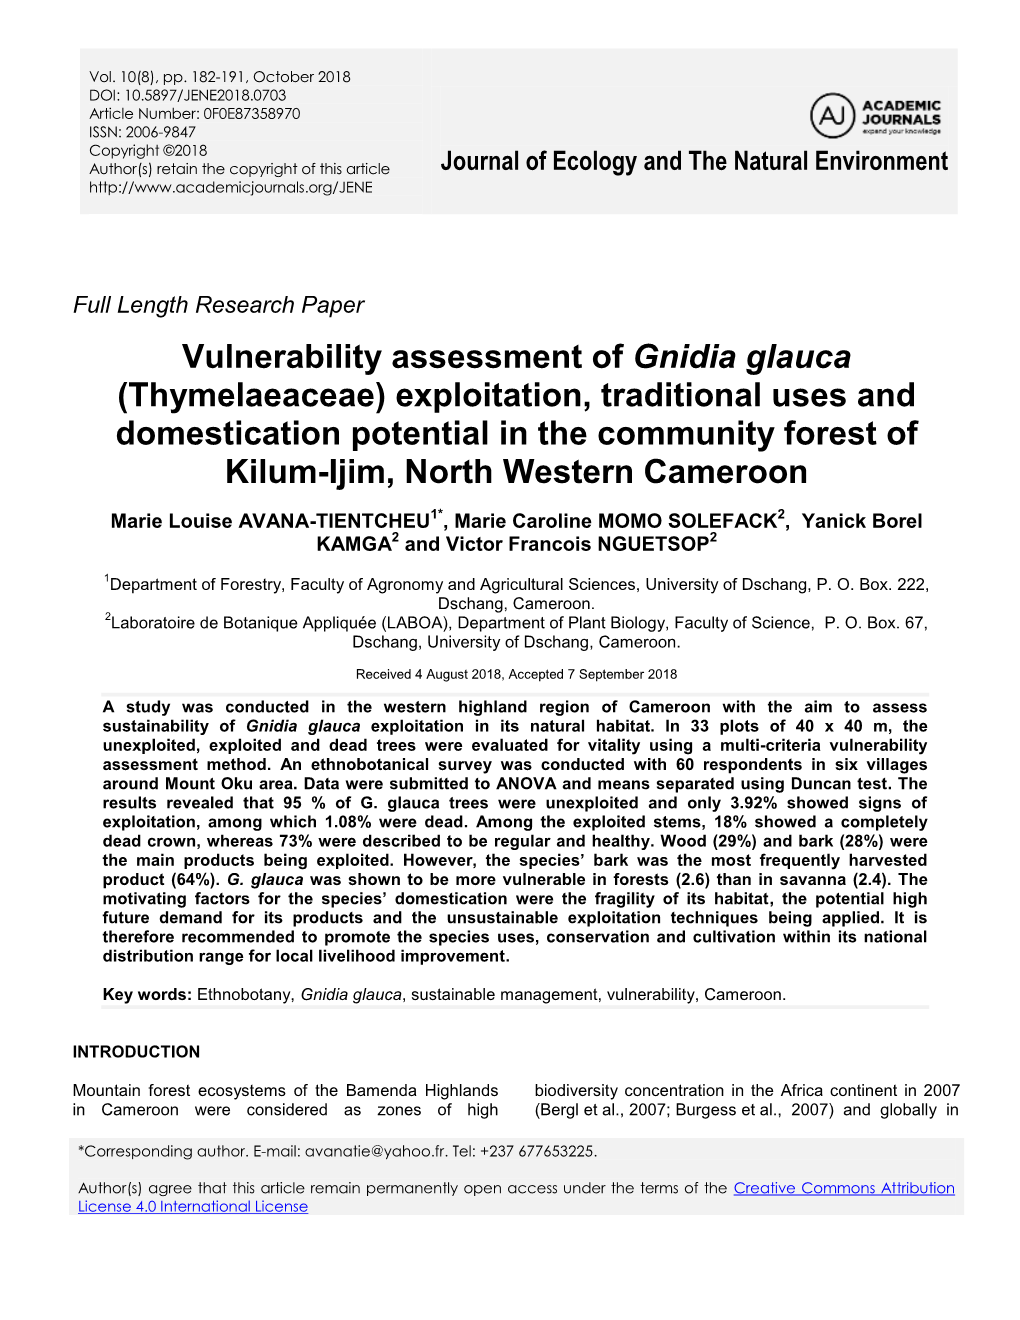 Vulnerability Assessment of Gnidia Glauca (Thymelaeaceae)